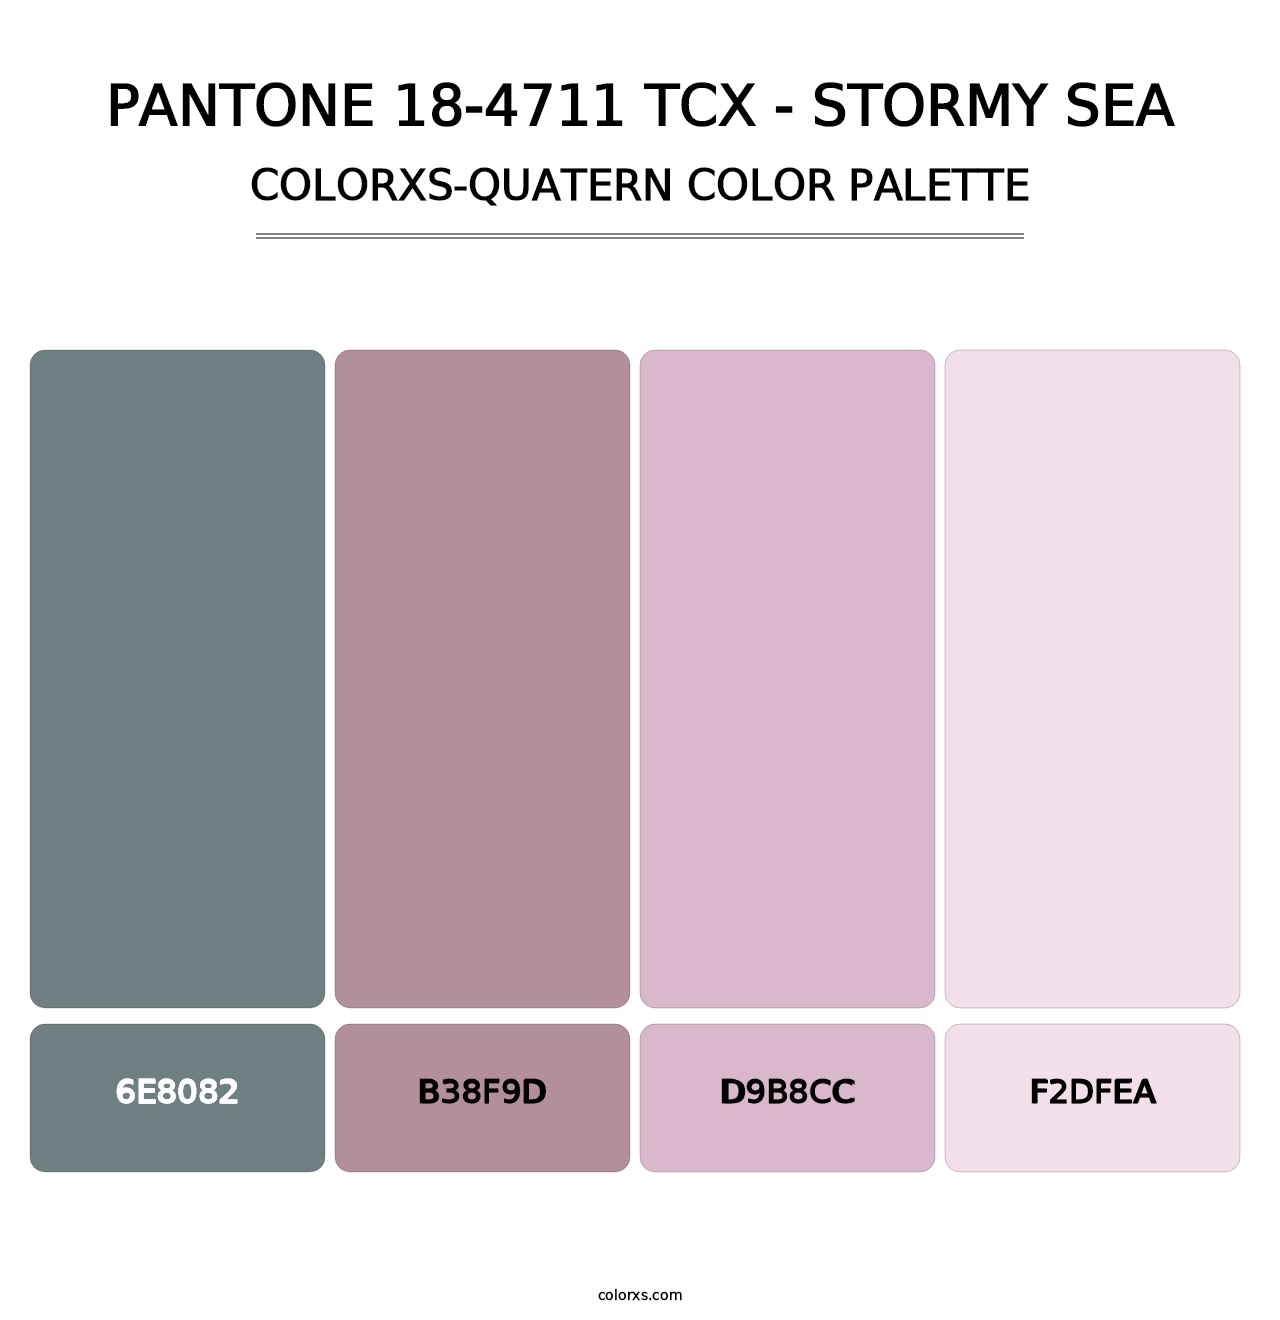 PANTONE 18-4711 TCX - Stormy Sea - Colorxs Quatern Palette